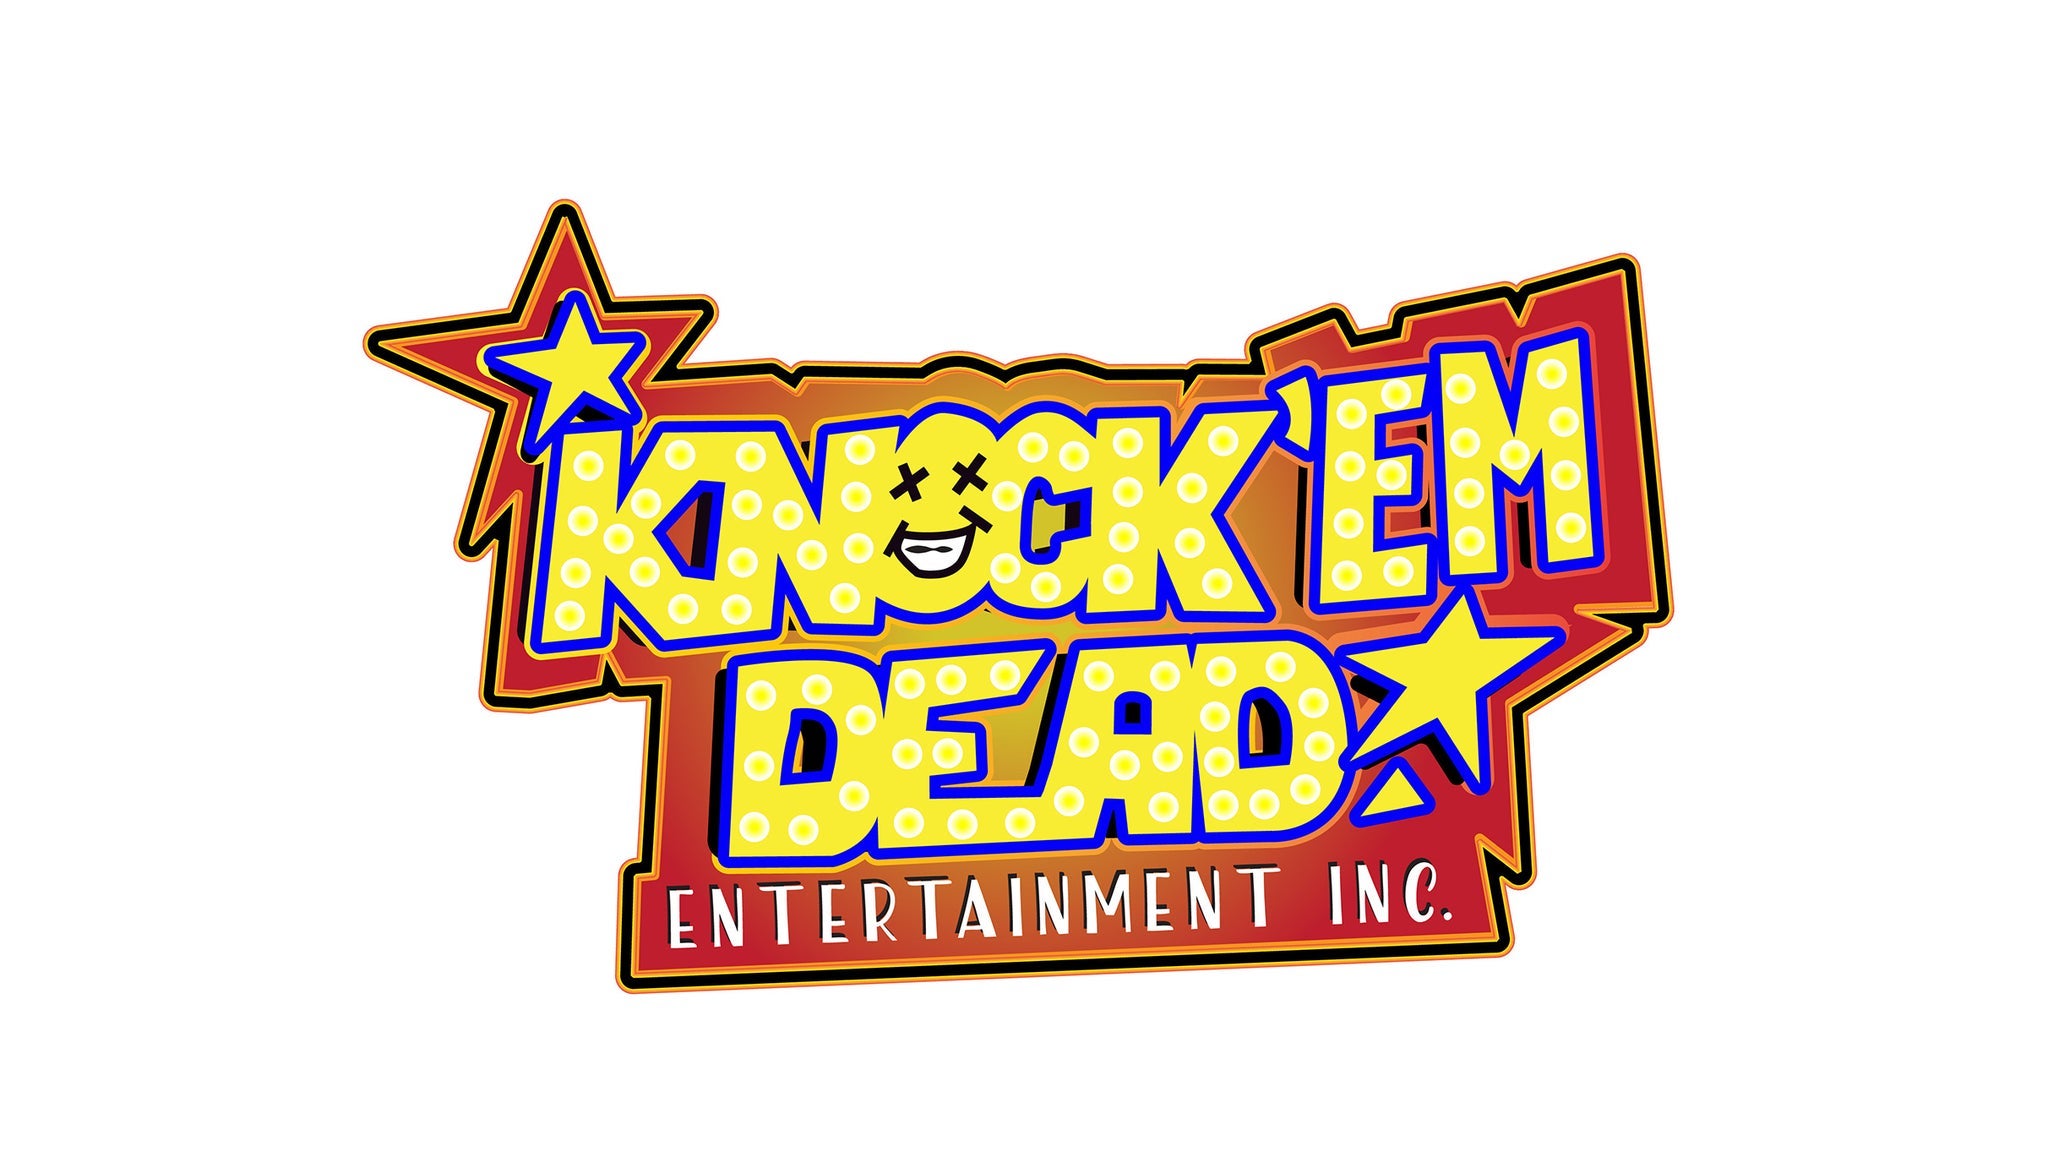 Knock Em Dead Entertainment presale information on freepresalepasswords.com